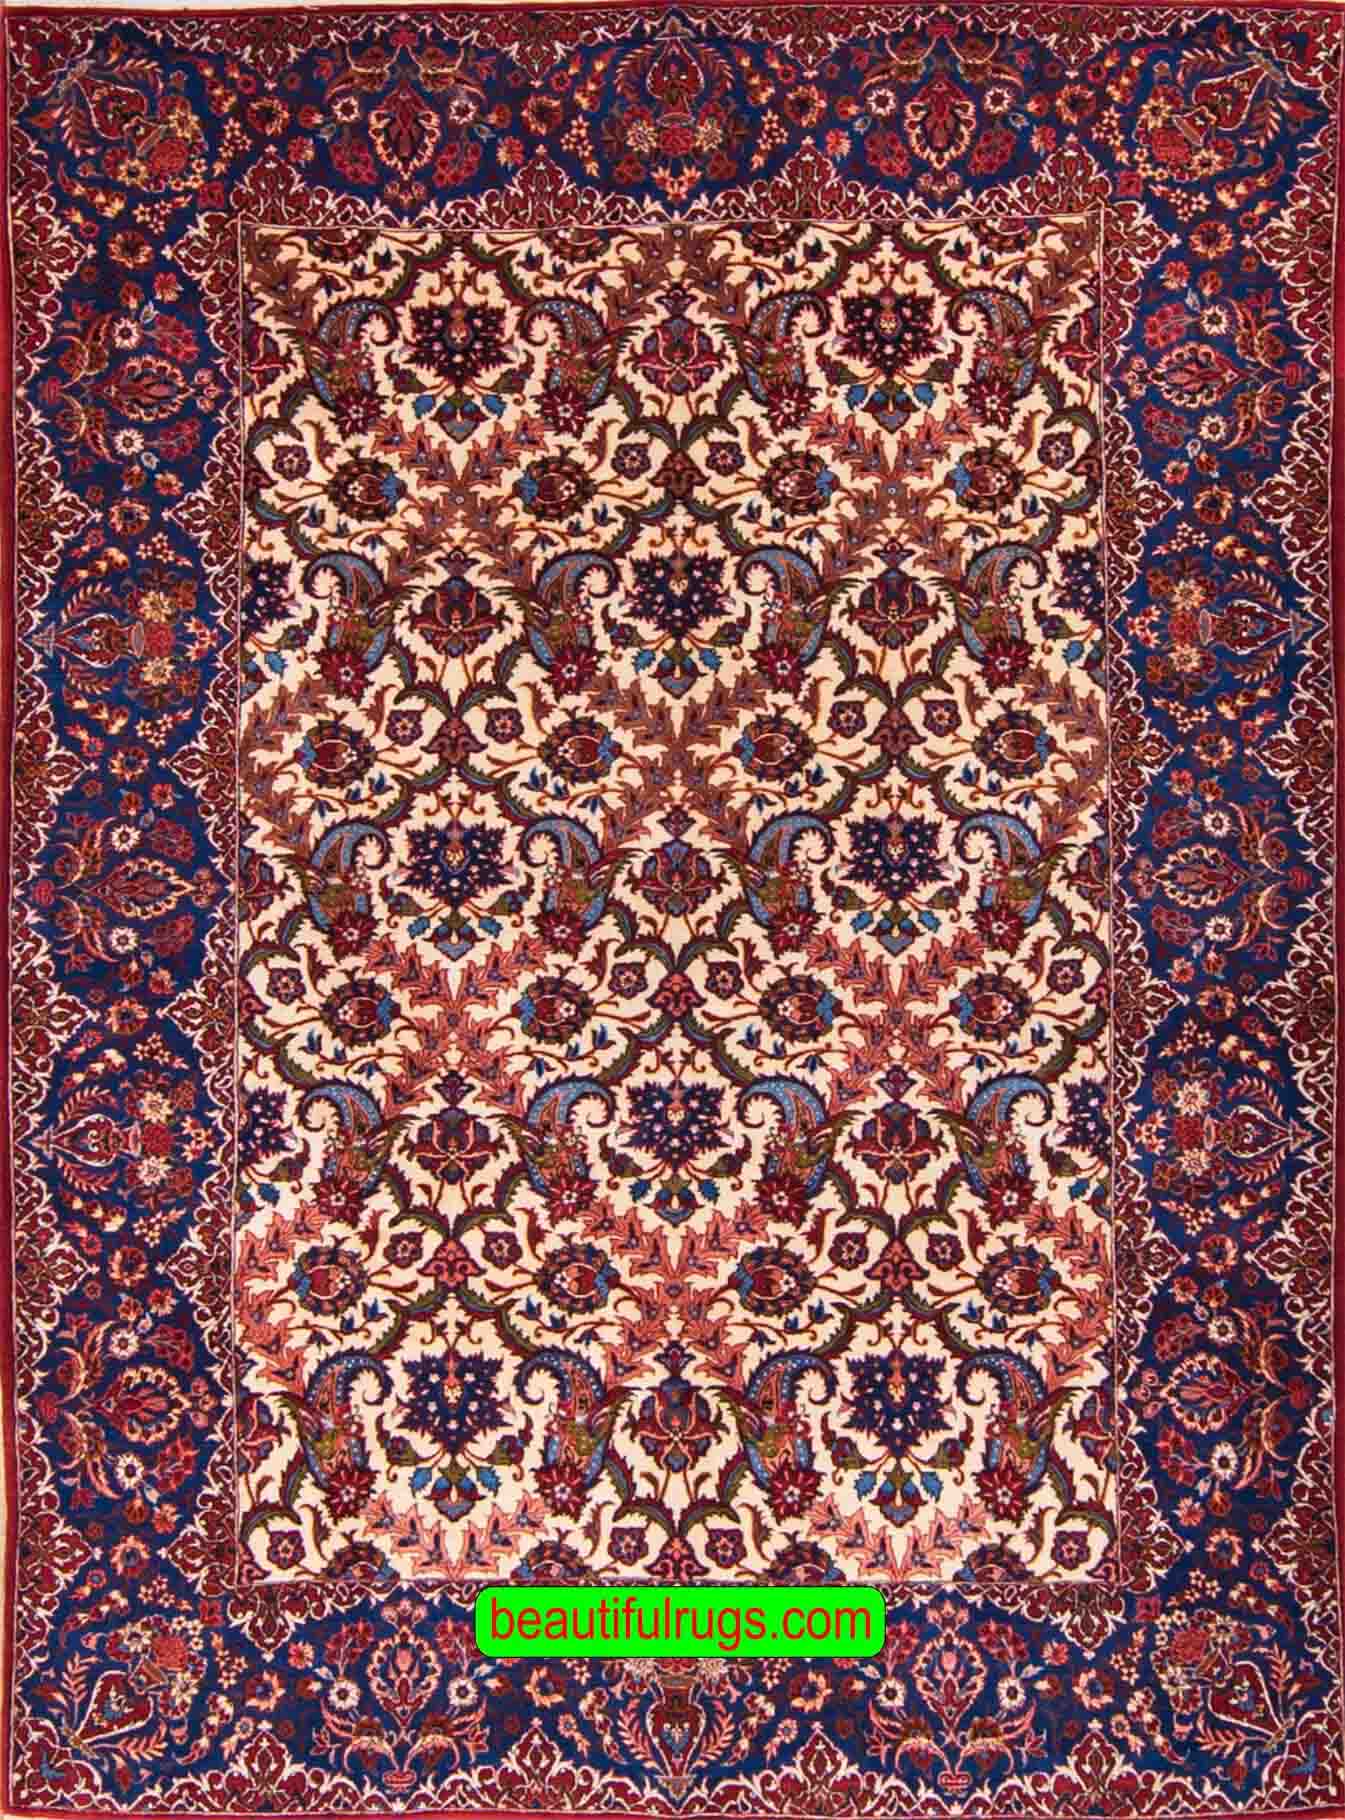 Antique Isfahan Rug, Handmade Persian Antique Isfahan Rug, size 5.3x7.1, main image